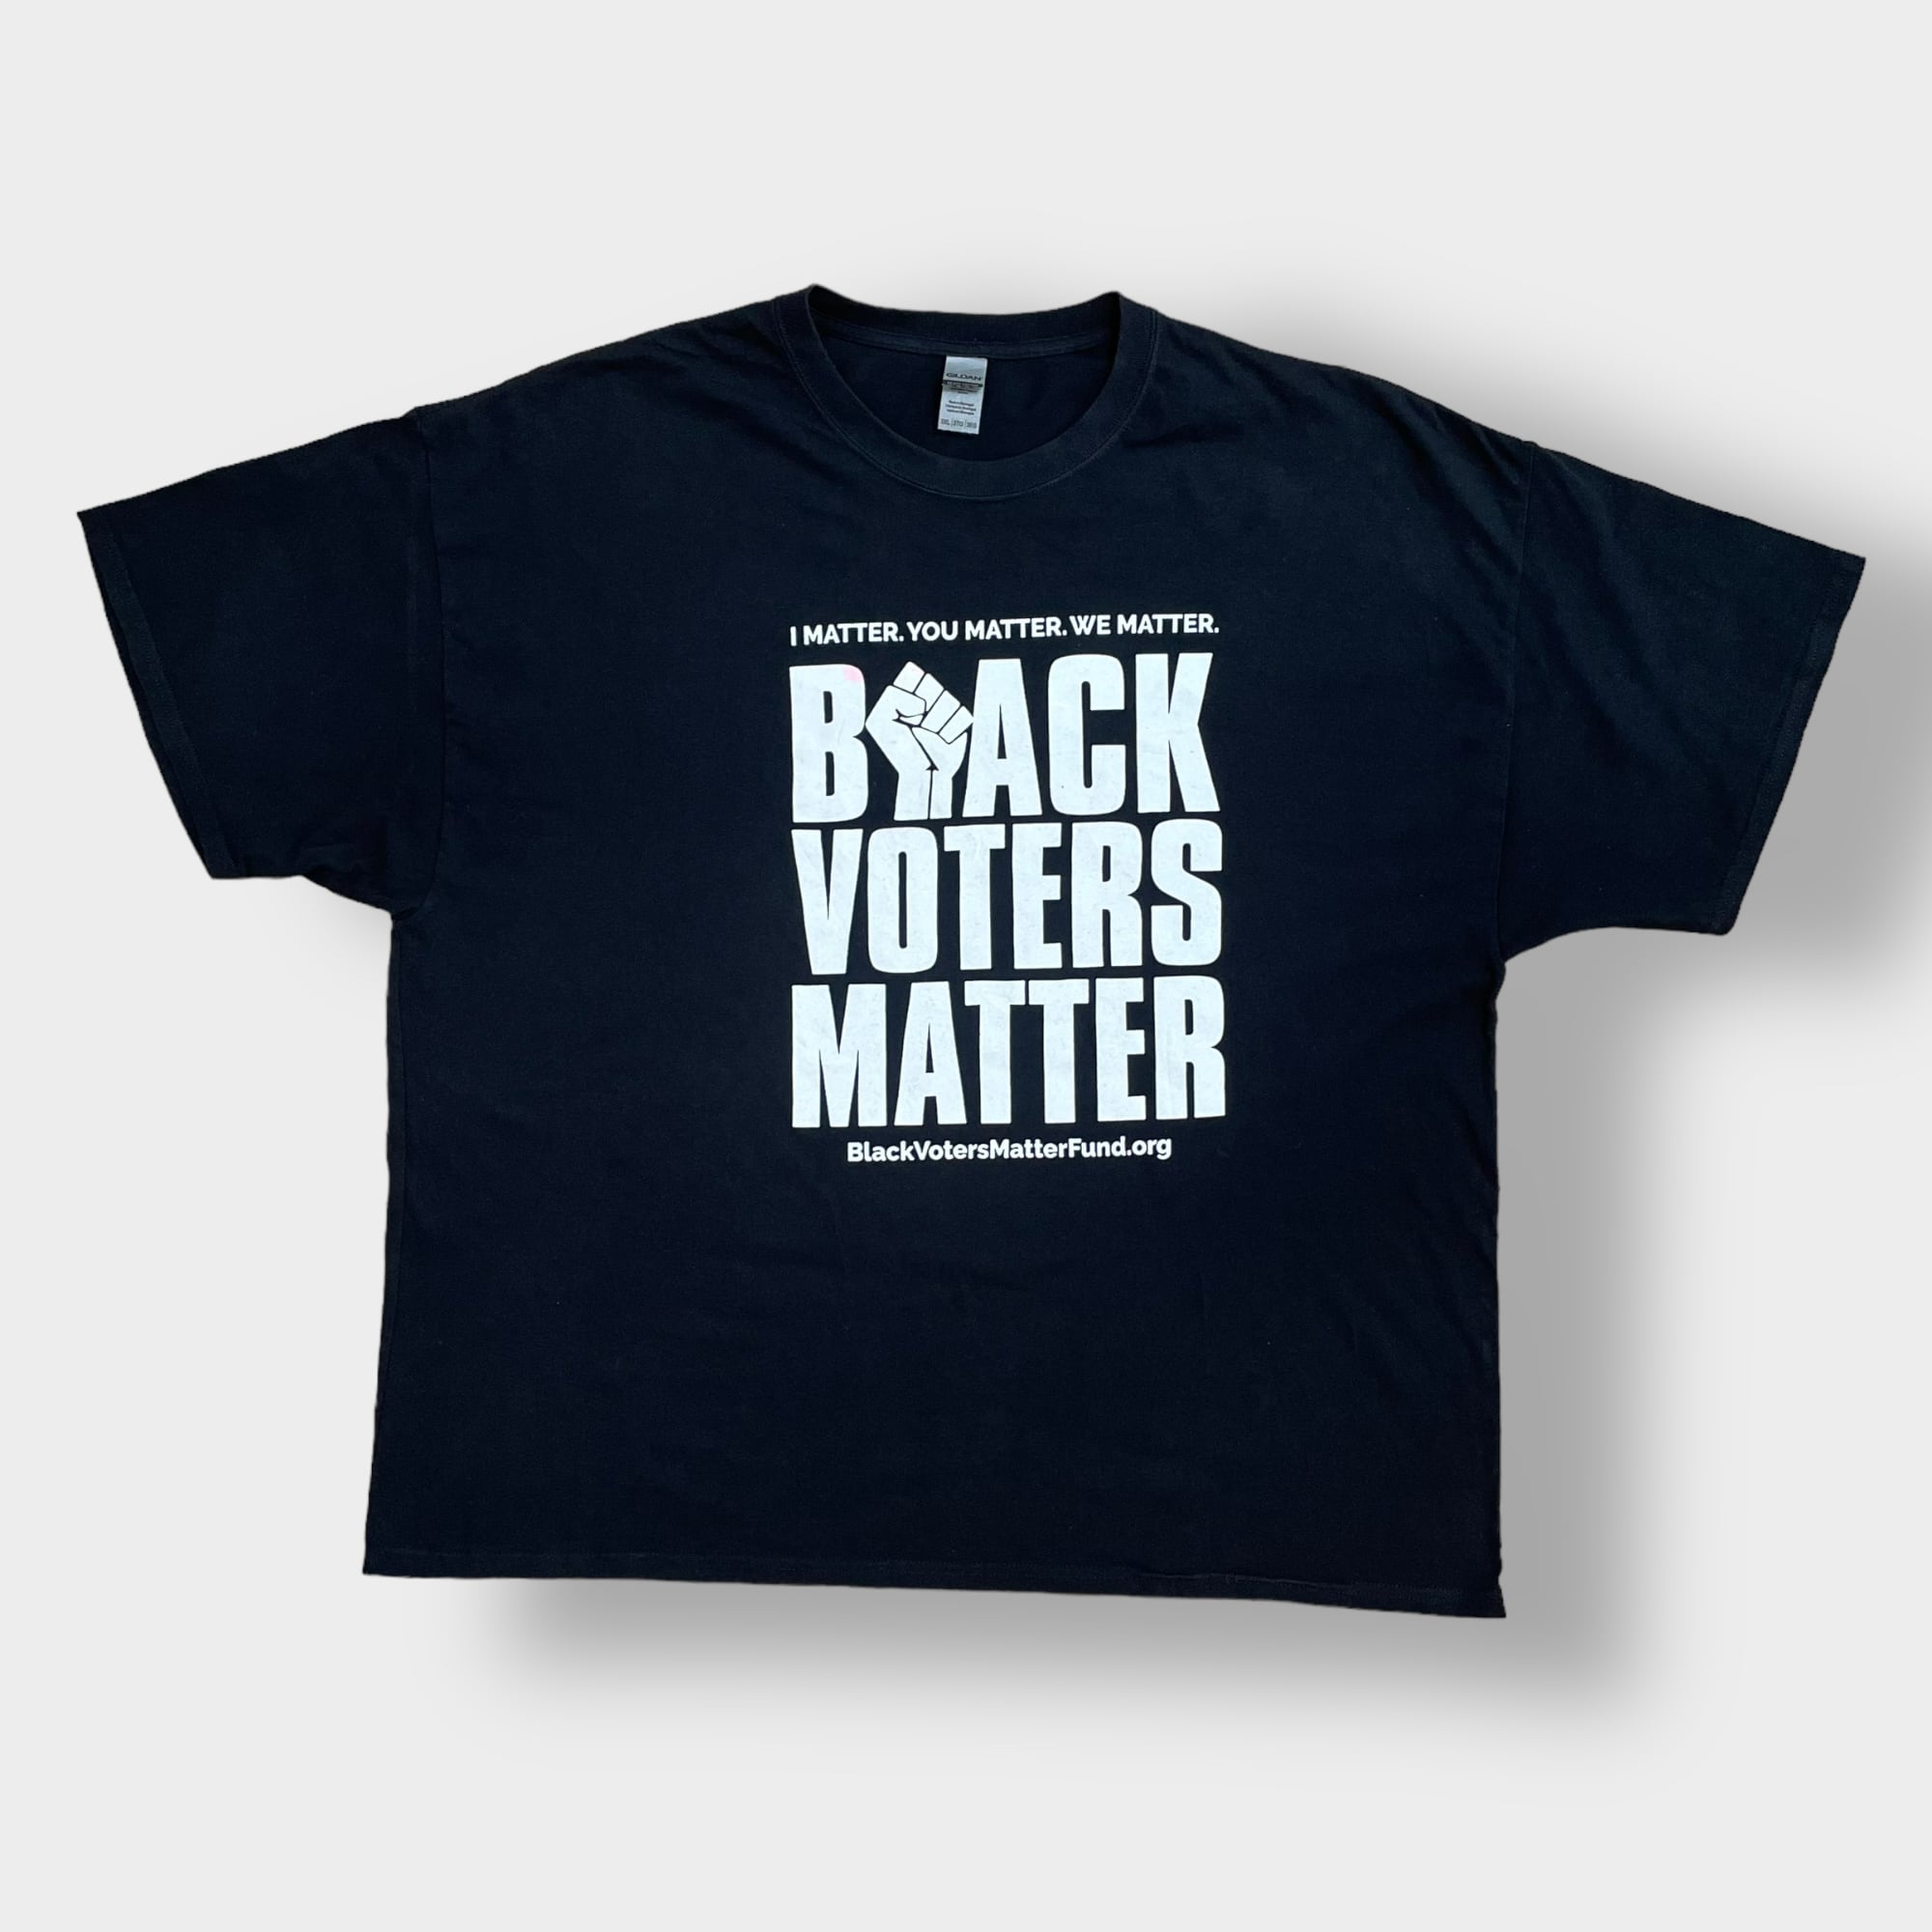 GILDAN】3XL ビッグサイズ Black Voters Matter ロゴ Tシャツ バック ...